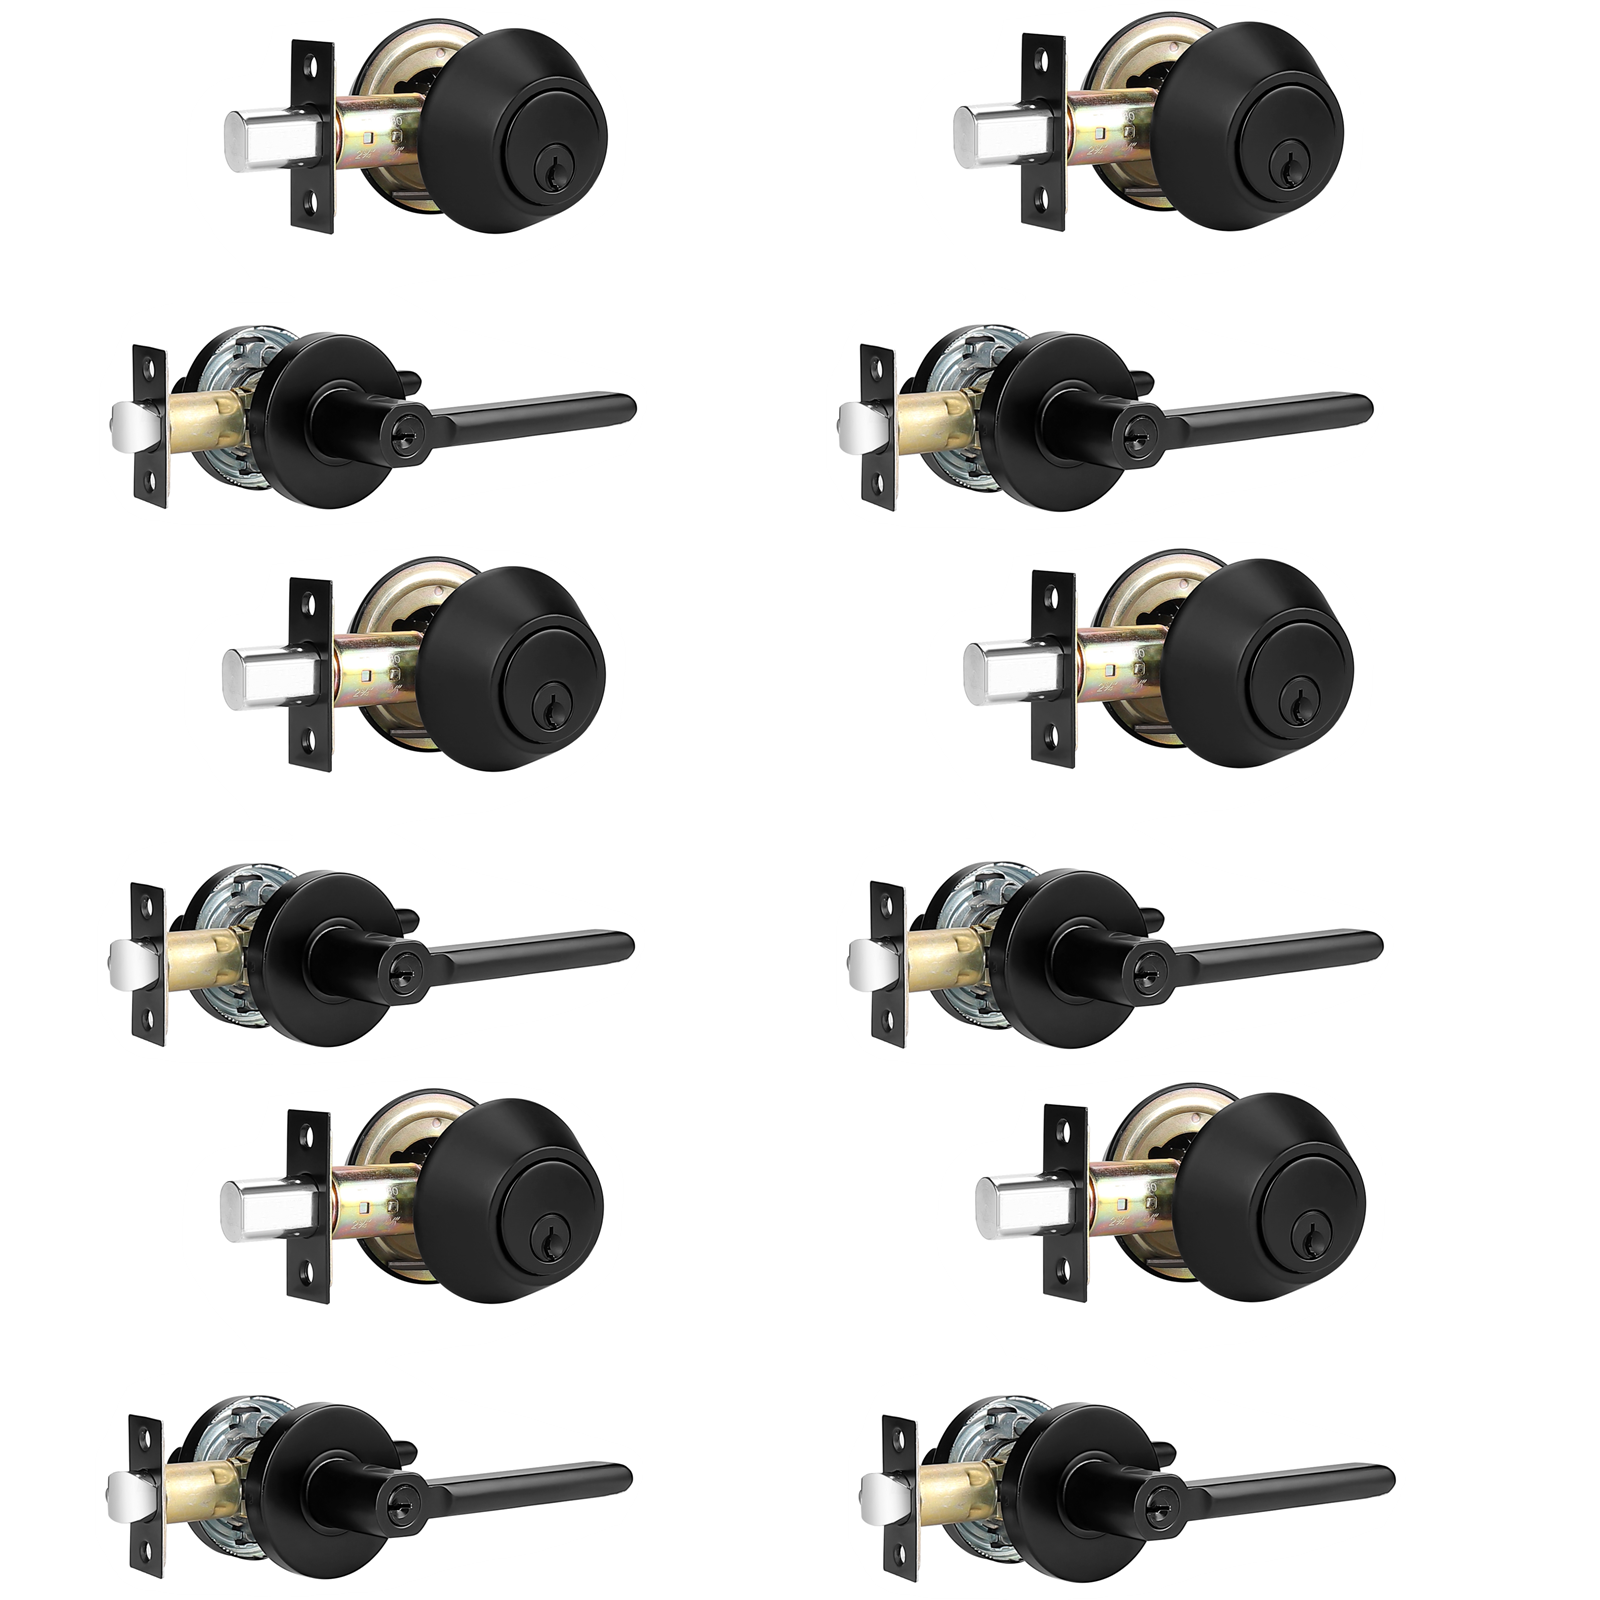 Keyed Entry Door Lever Lock and Double Cylinder Deadbolts Combo Pack (Keyed Alike), Black Finish DL1637ET-102BK